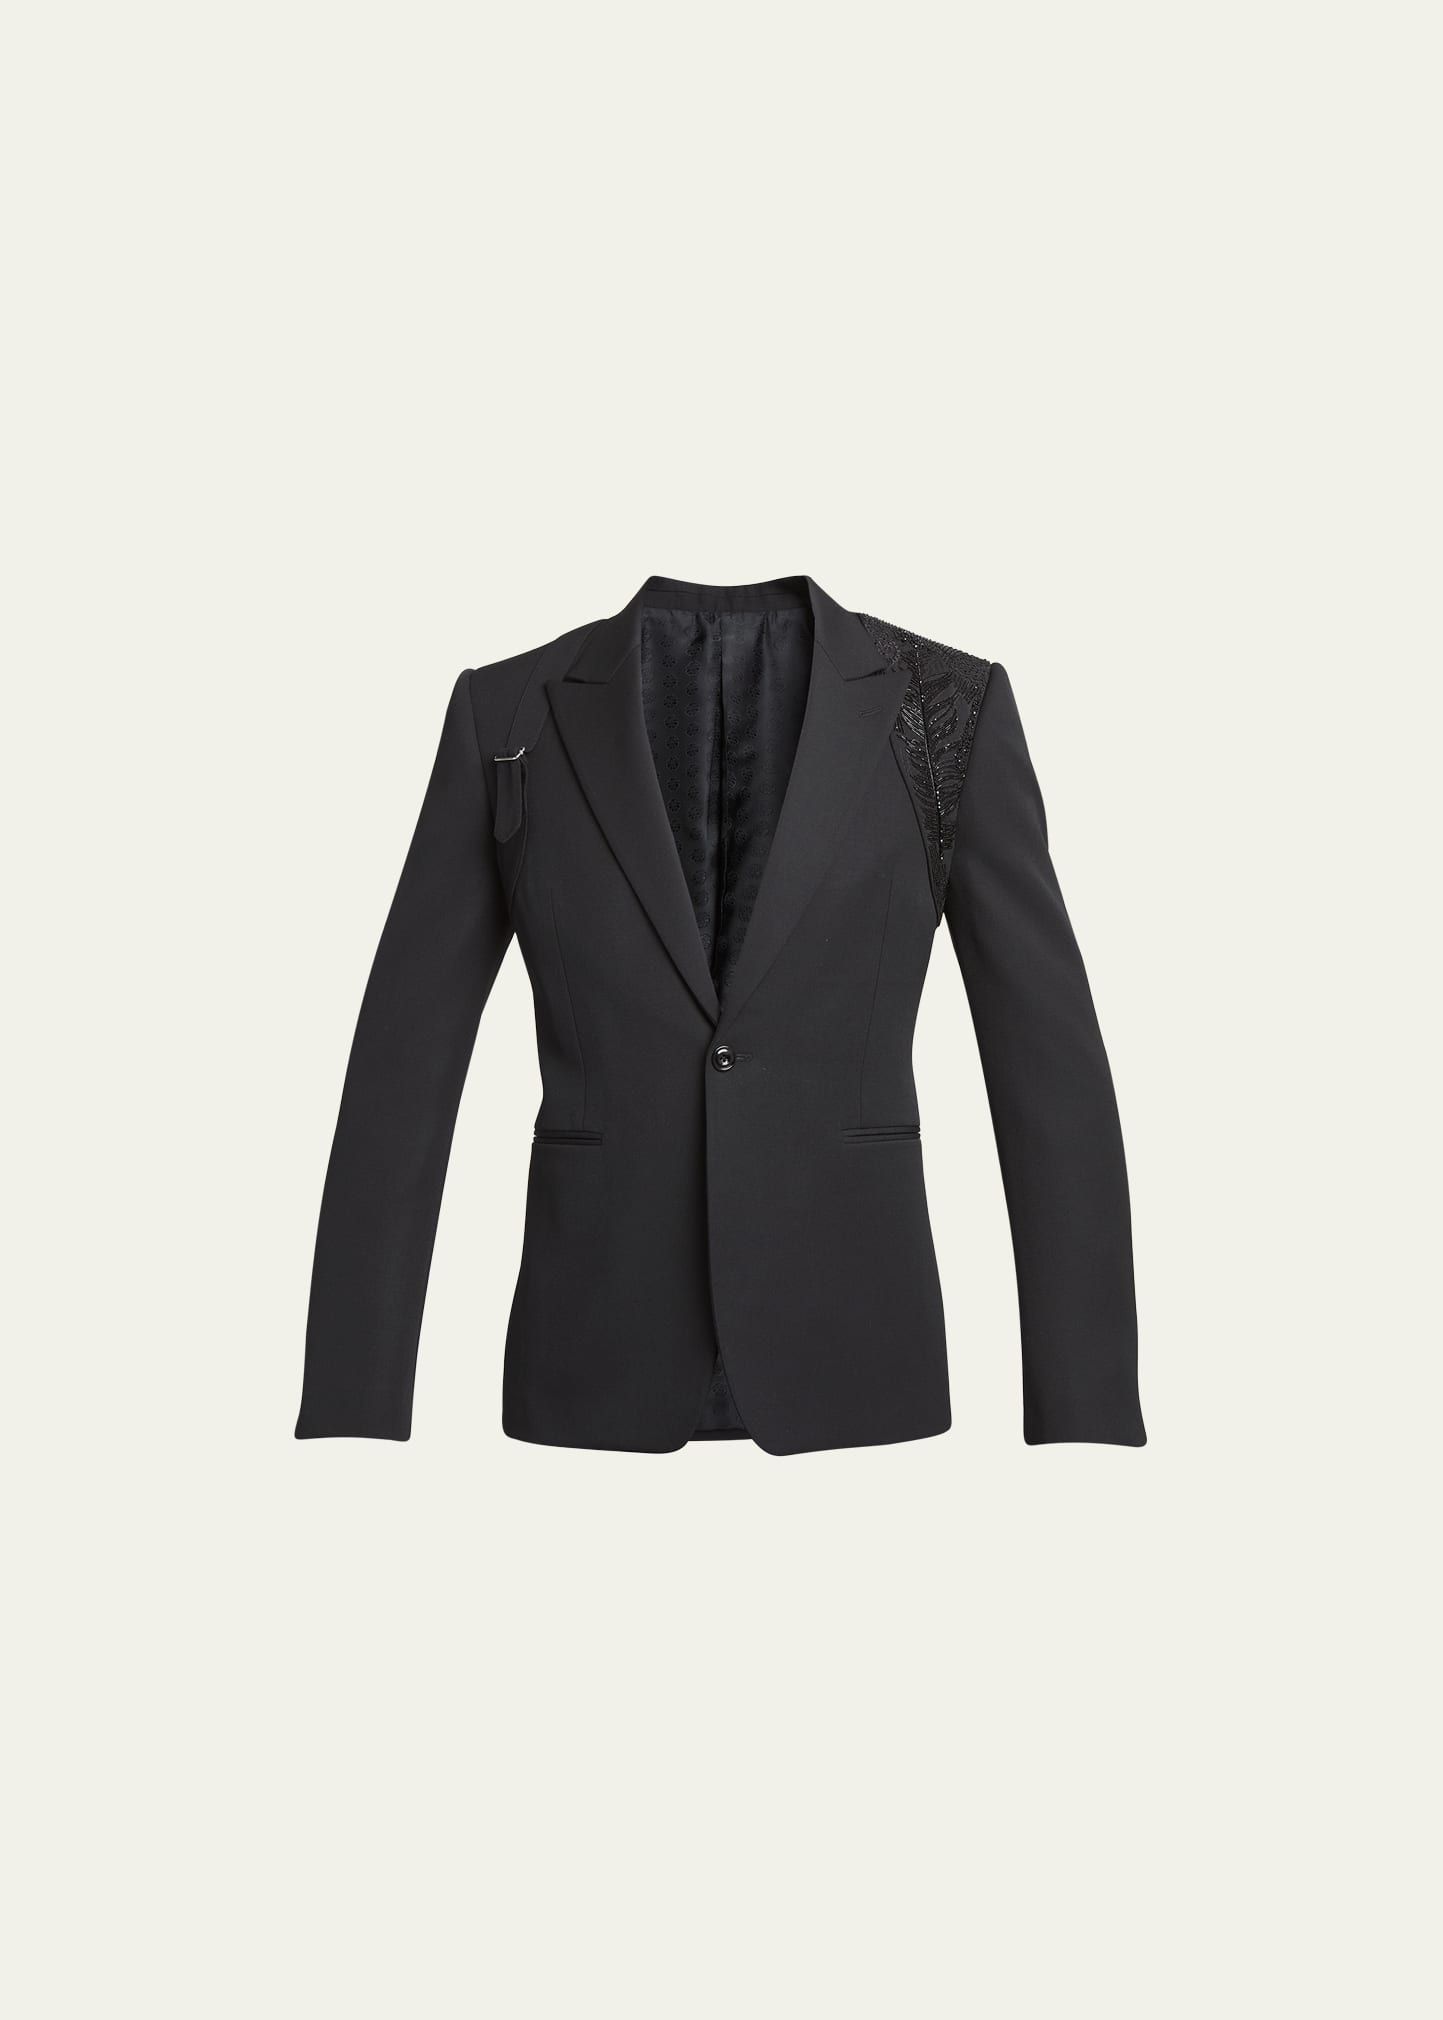 Alexander Mcqueen Men's Grain De Poudre Crystal Harness Tuxedo Jacket In Black